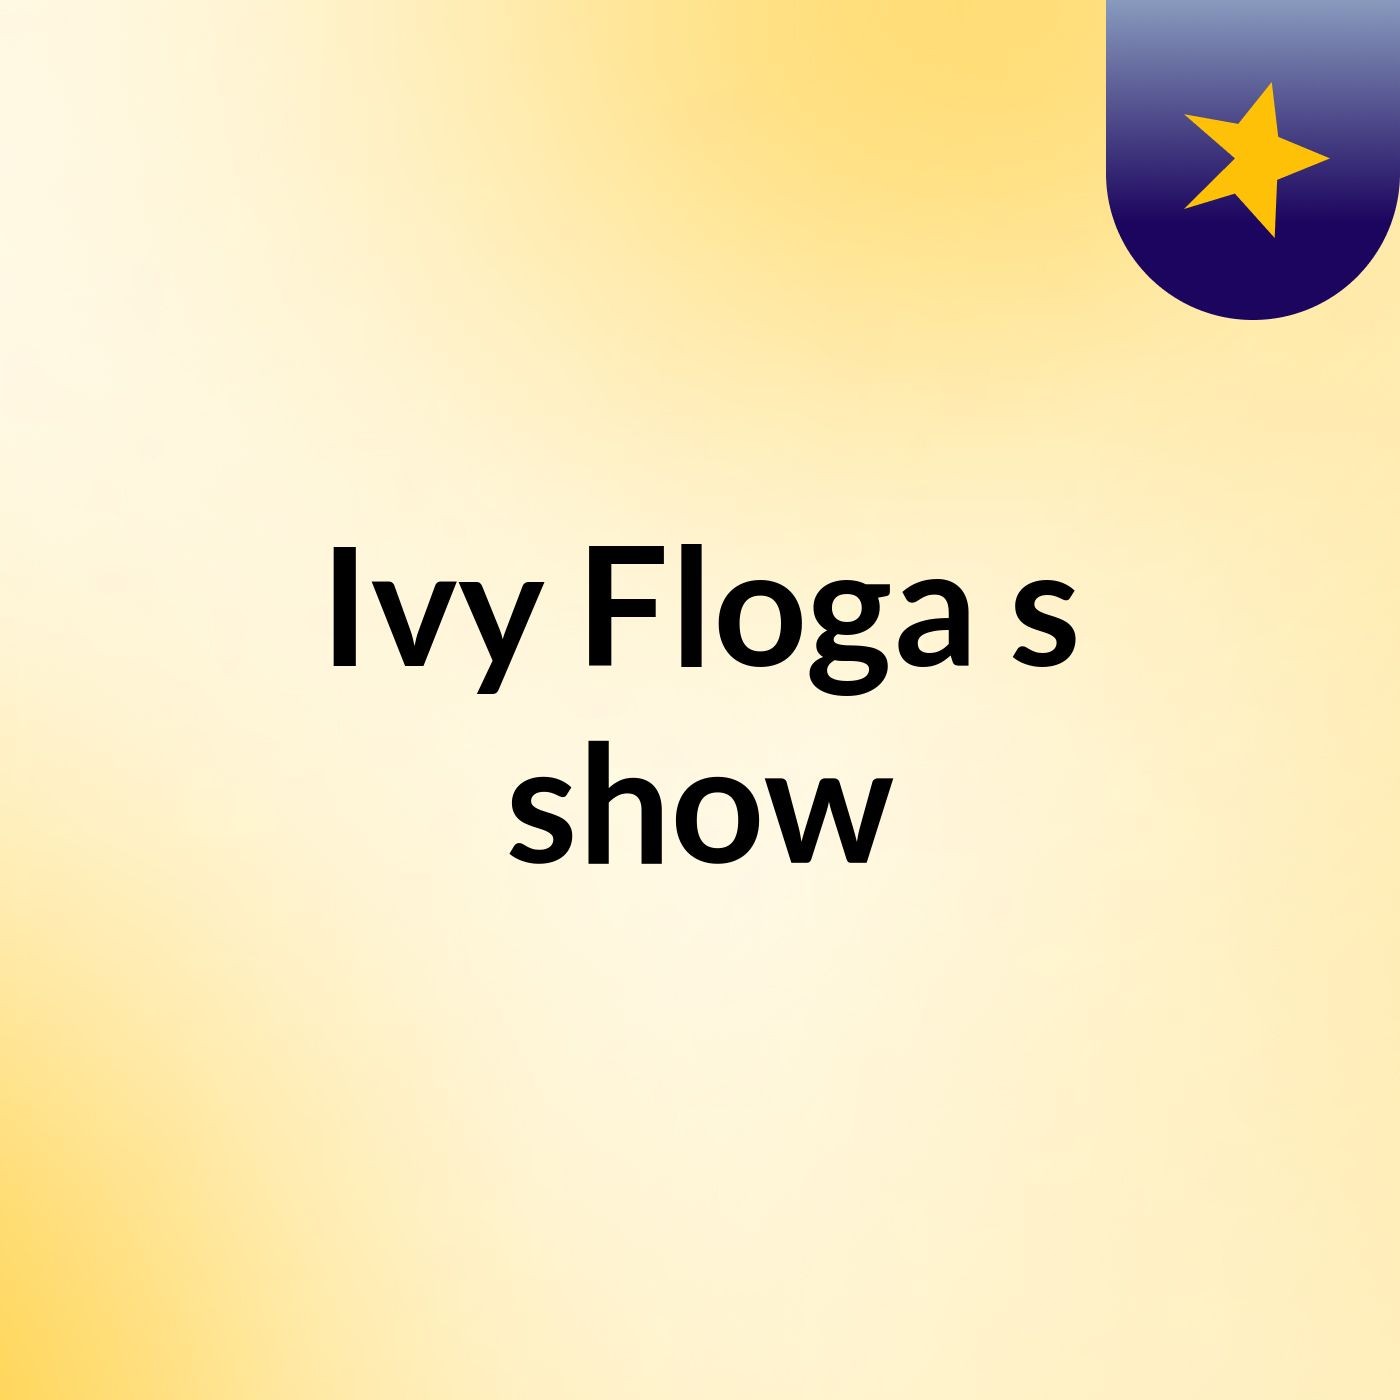 Episode 4 - Ivy Floga's show